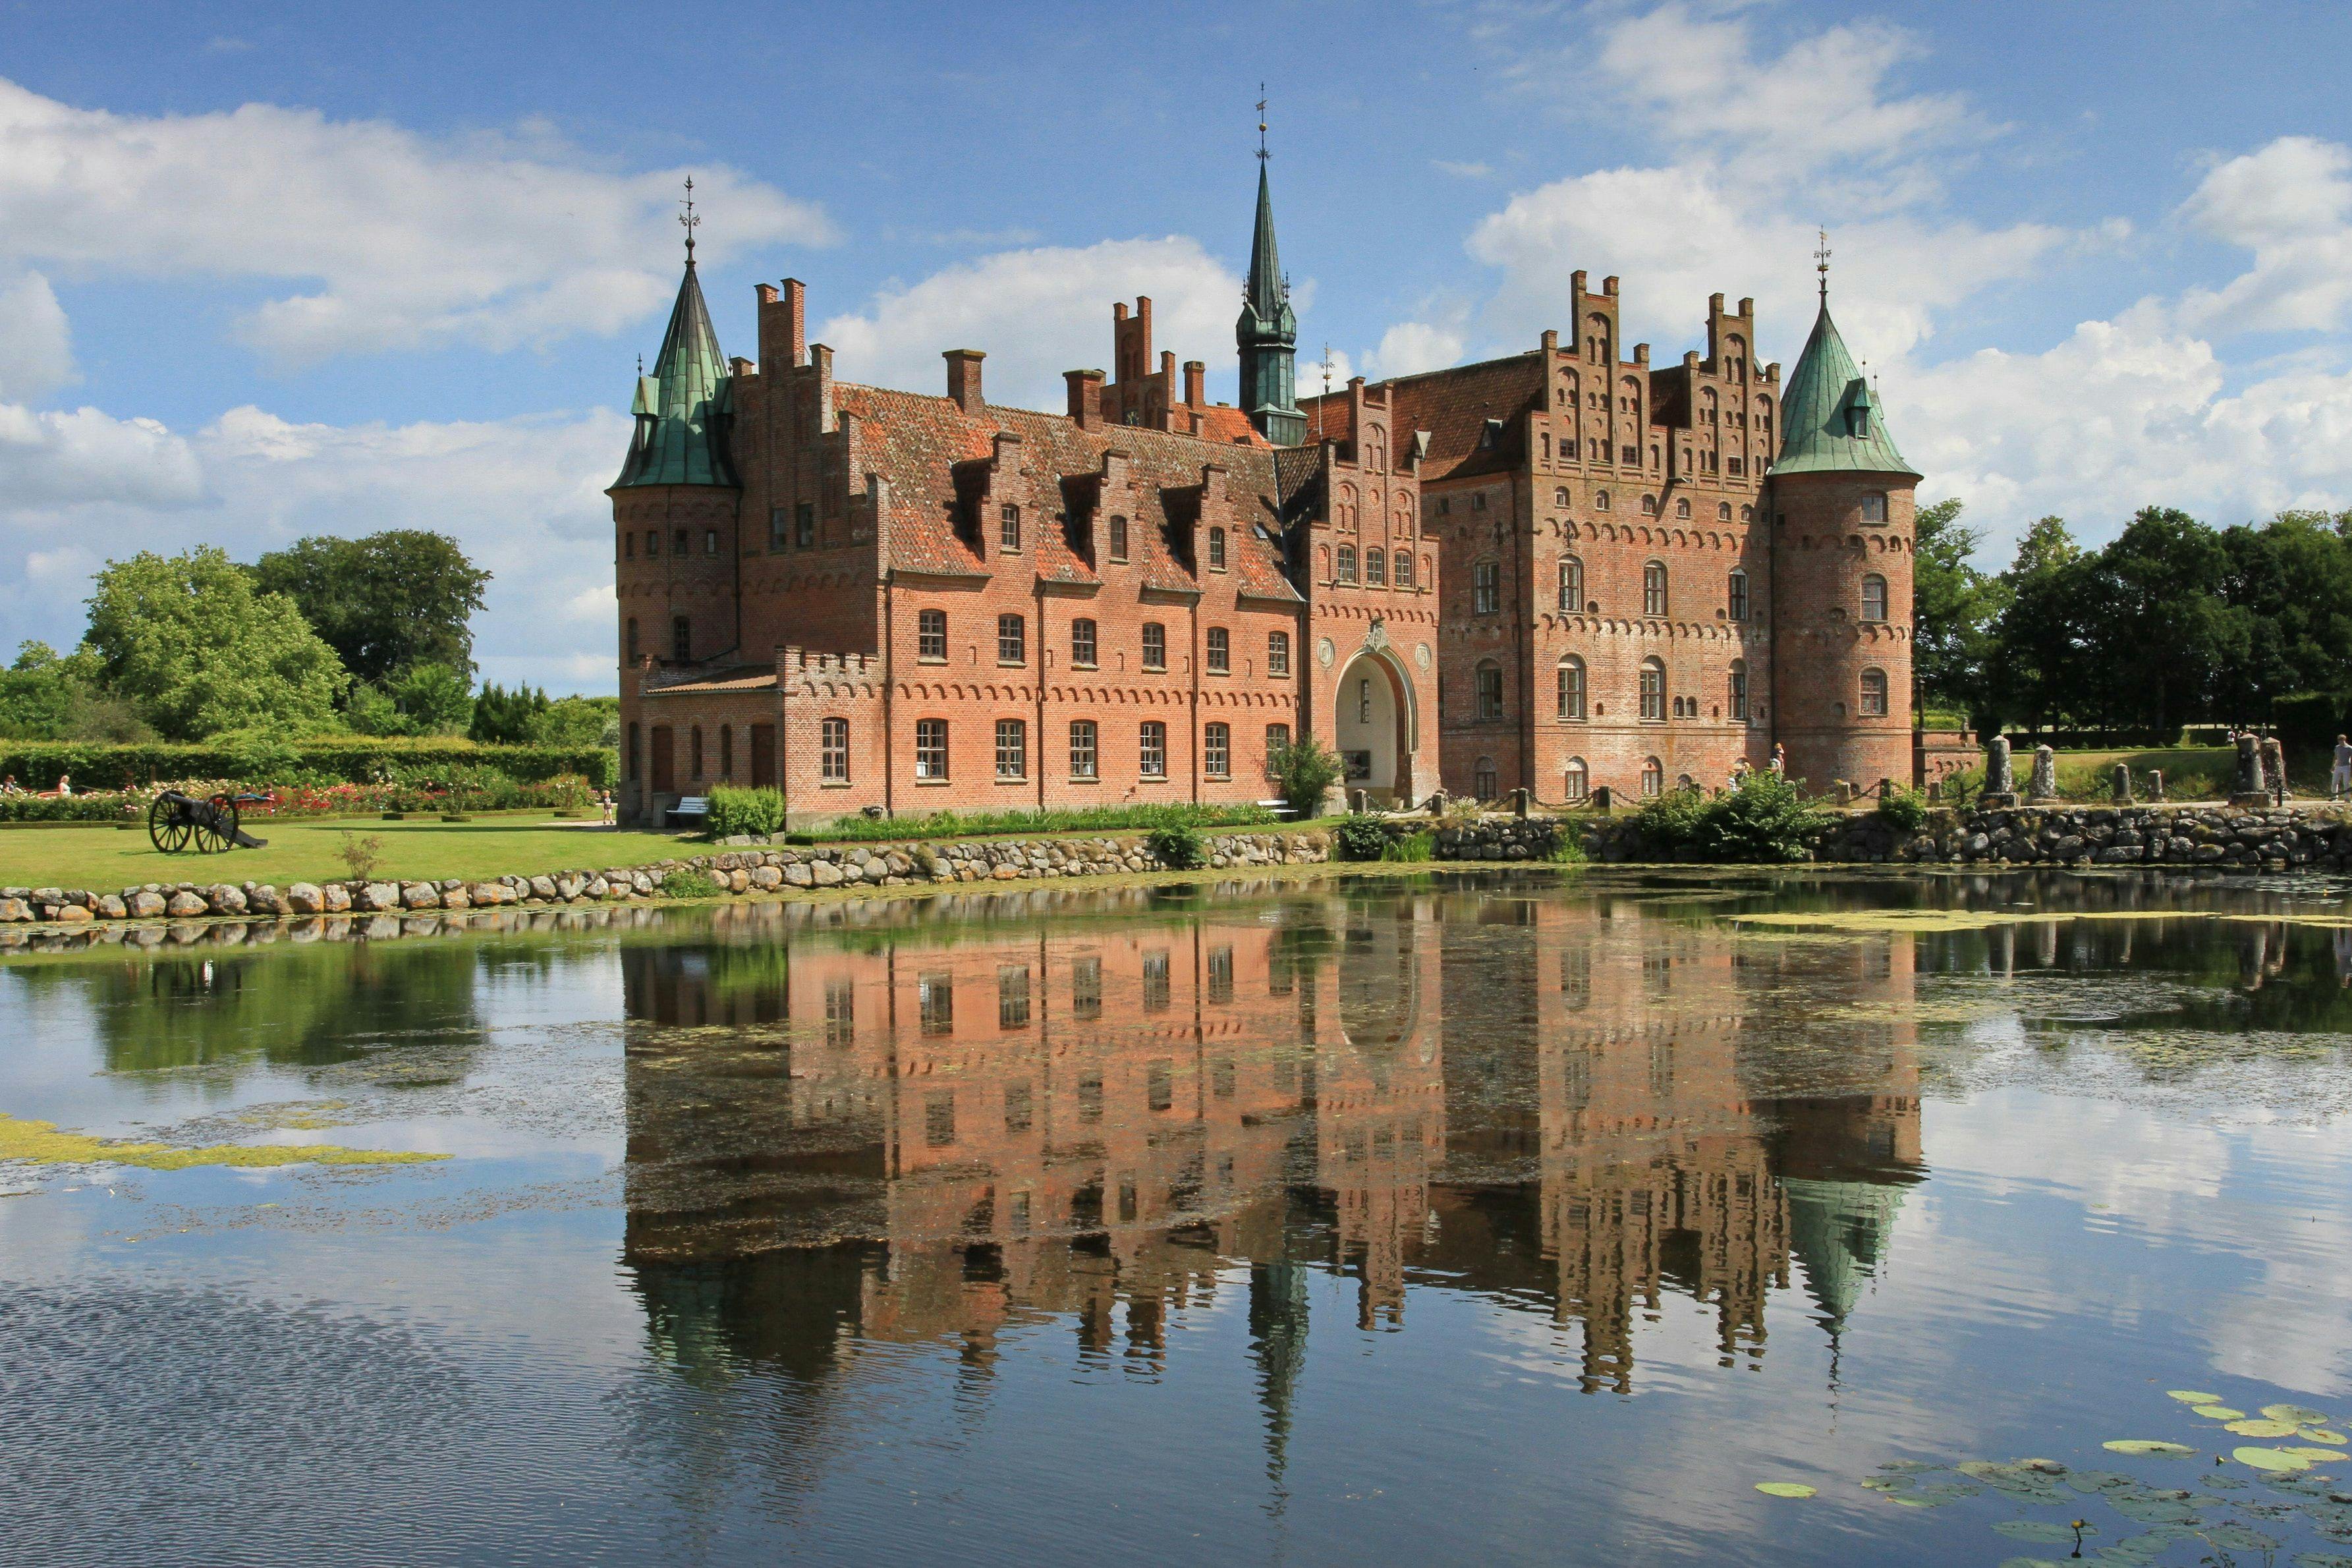 Egeskov Castle in Kv�rndrup, Denmark